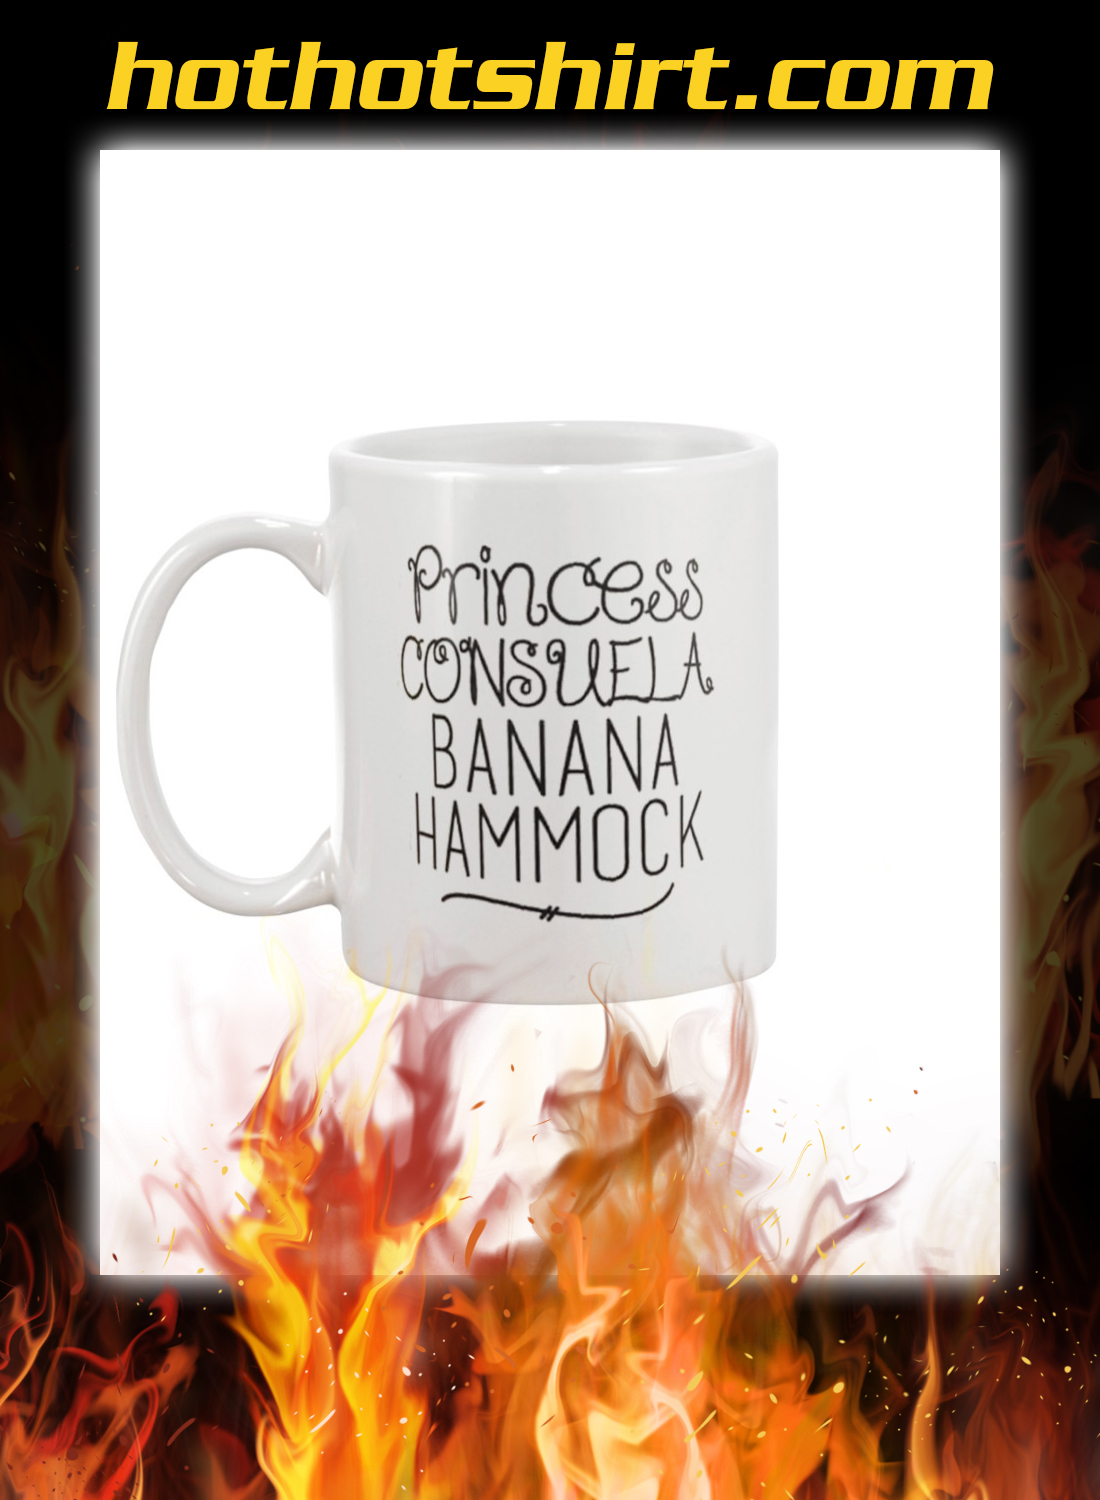 Princess consuela banana hammock mug